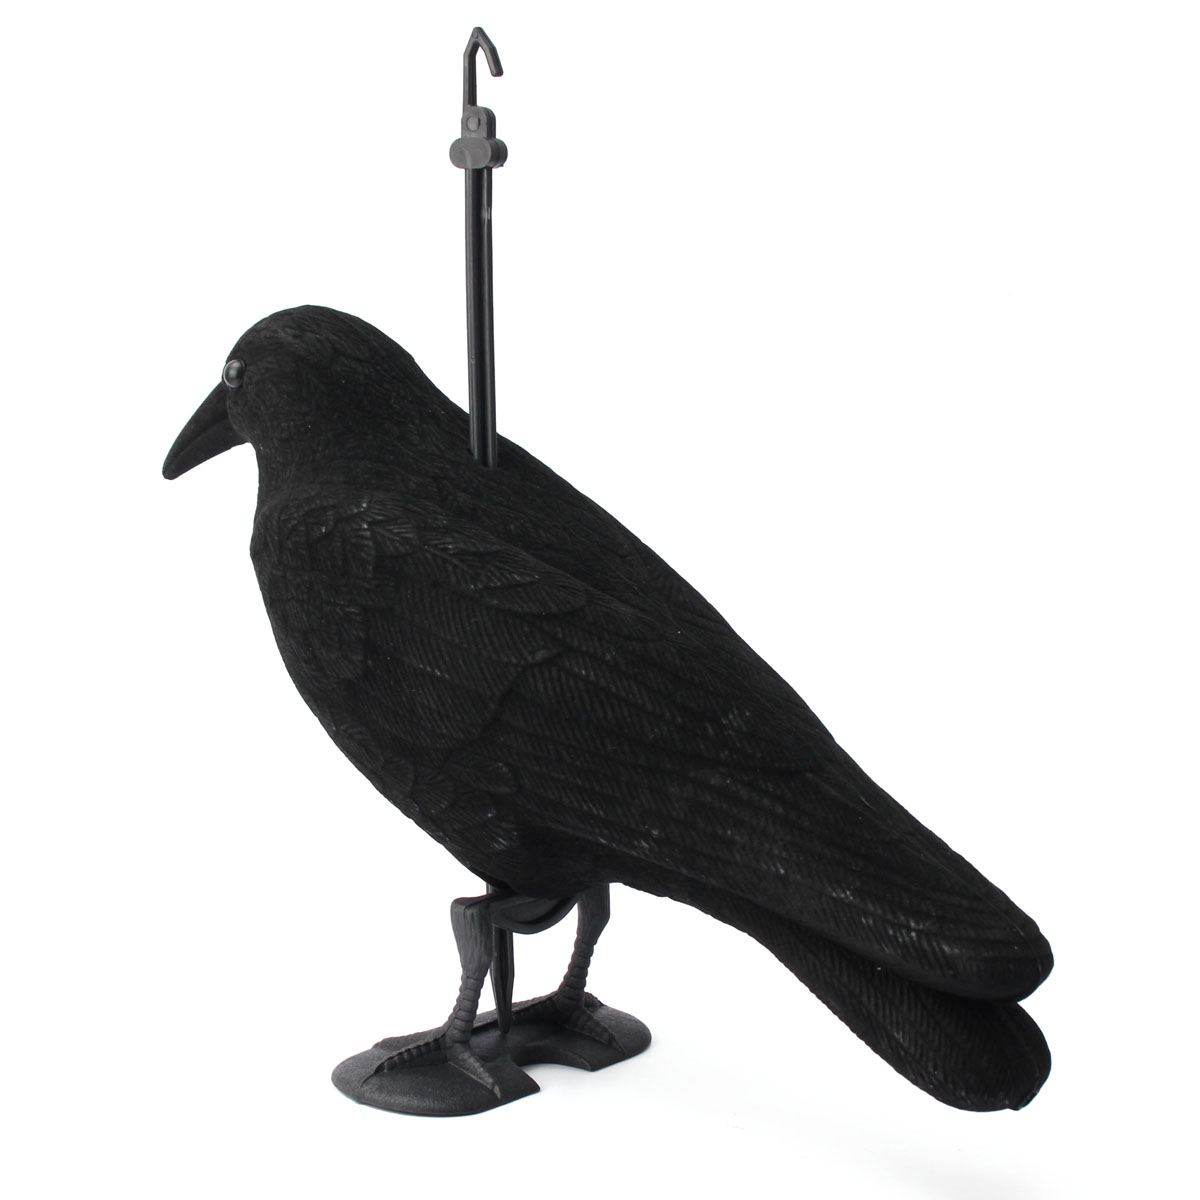 1Pcs-Birds-Decoy-Plastic-Flocked-Hard-Black-Crow-Trap-Decoration-for-Hunting-Camping-1001075-3